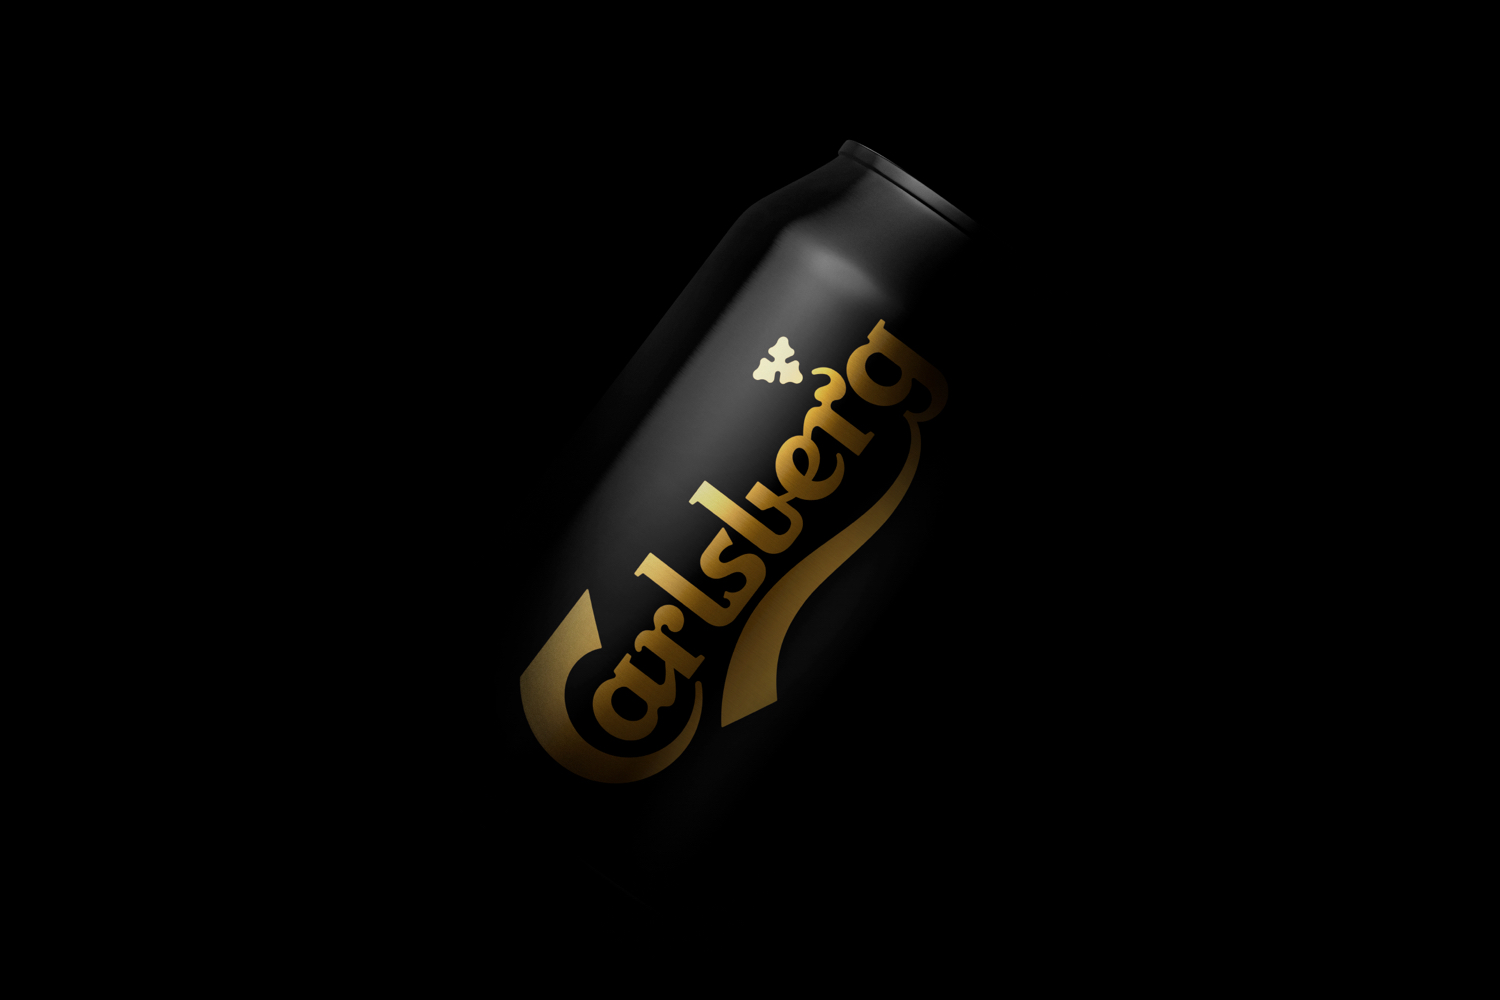 Beer Branding & Packaging – Carlsberg Black Gold by Kontrapunkt, Denmark